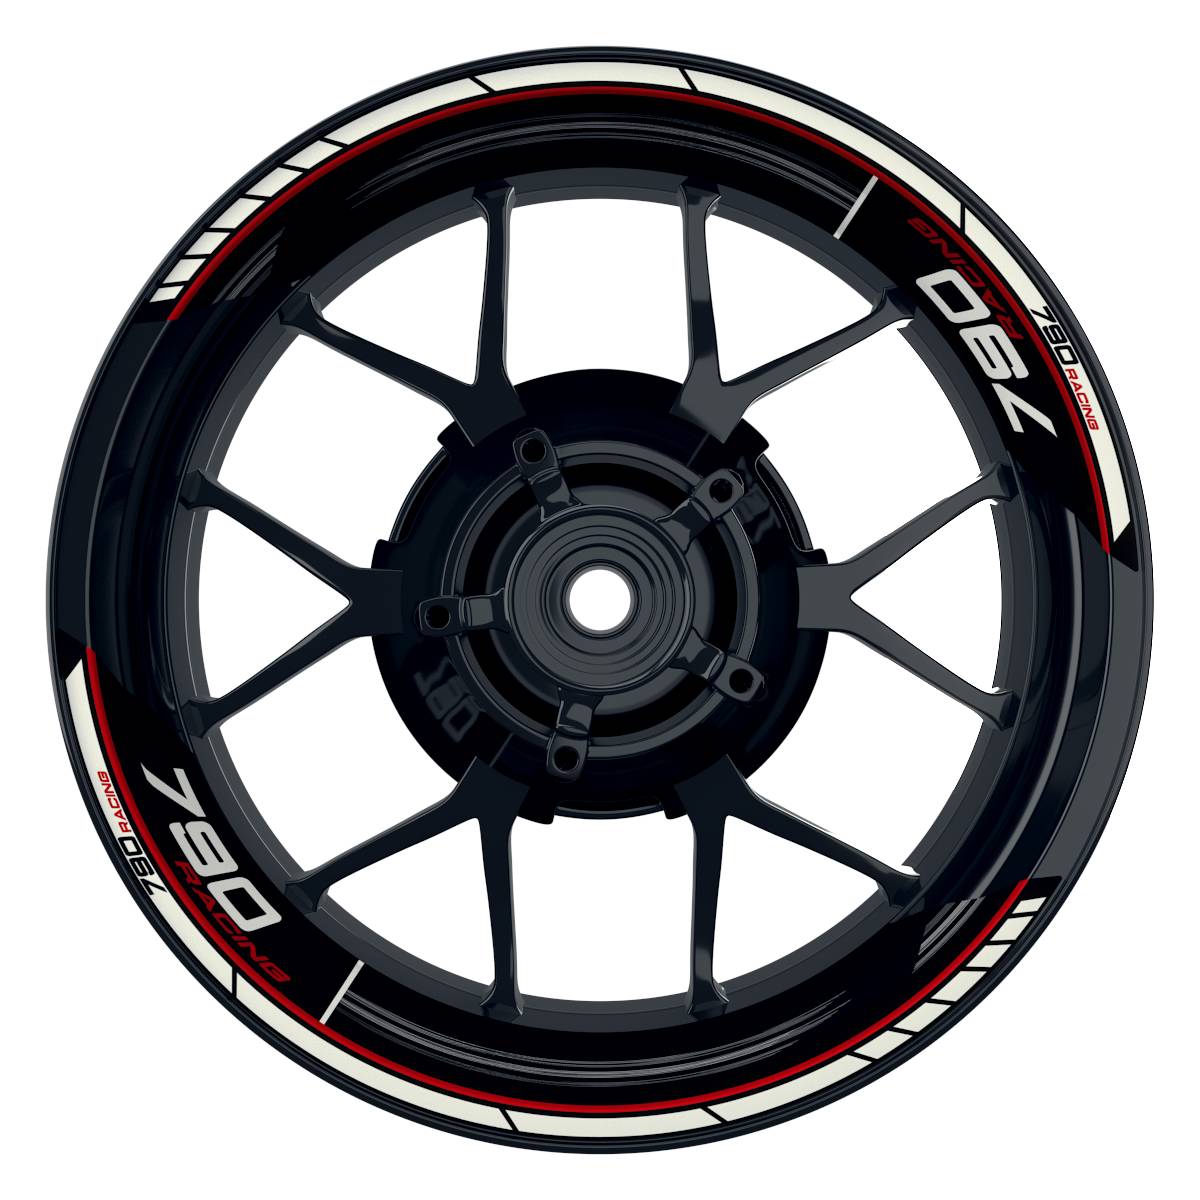 KTM Racing 790 Scratched schwarz rot Frontansicht